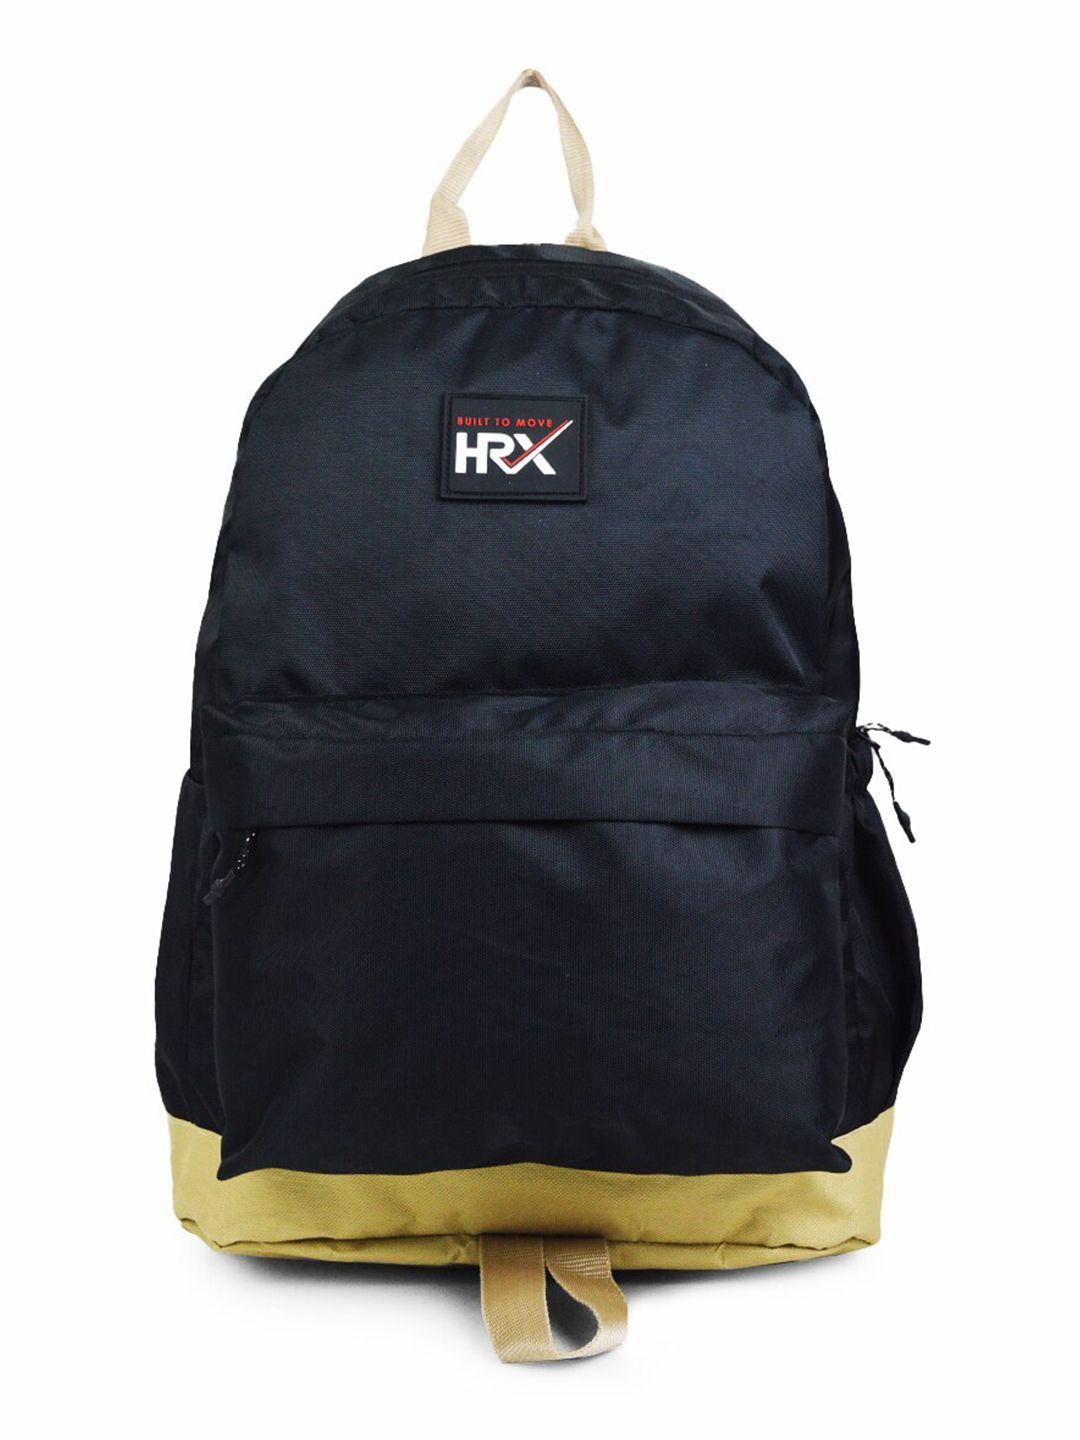 hrx by hrithik roshan unisex ergonomic backpack-up to 15 inch